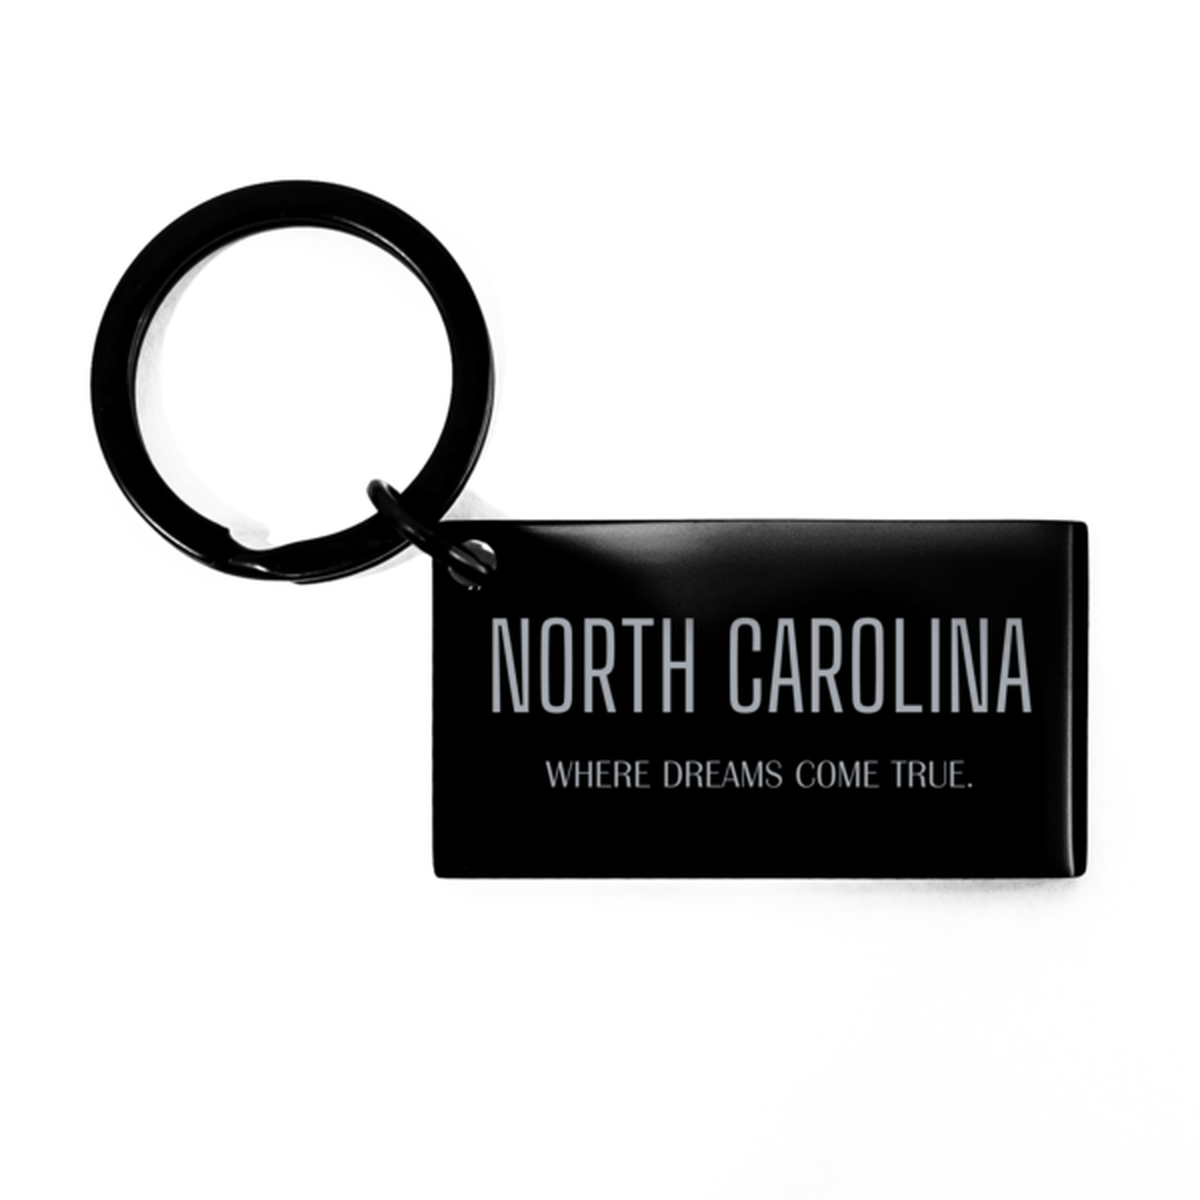 Love North Carolina State Keychain, North Carolina Where dreams come true, Birthday Inspirational Gifts For North Carolina Men, Women, Friends